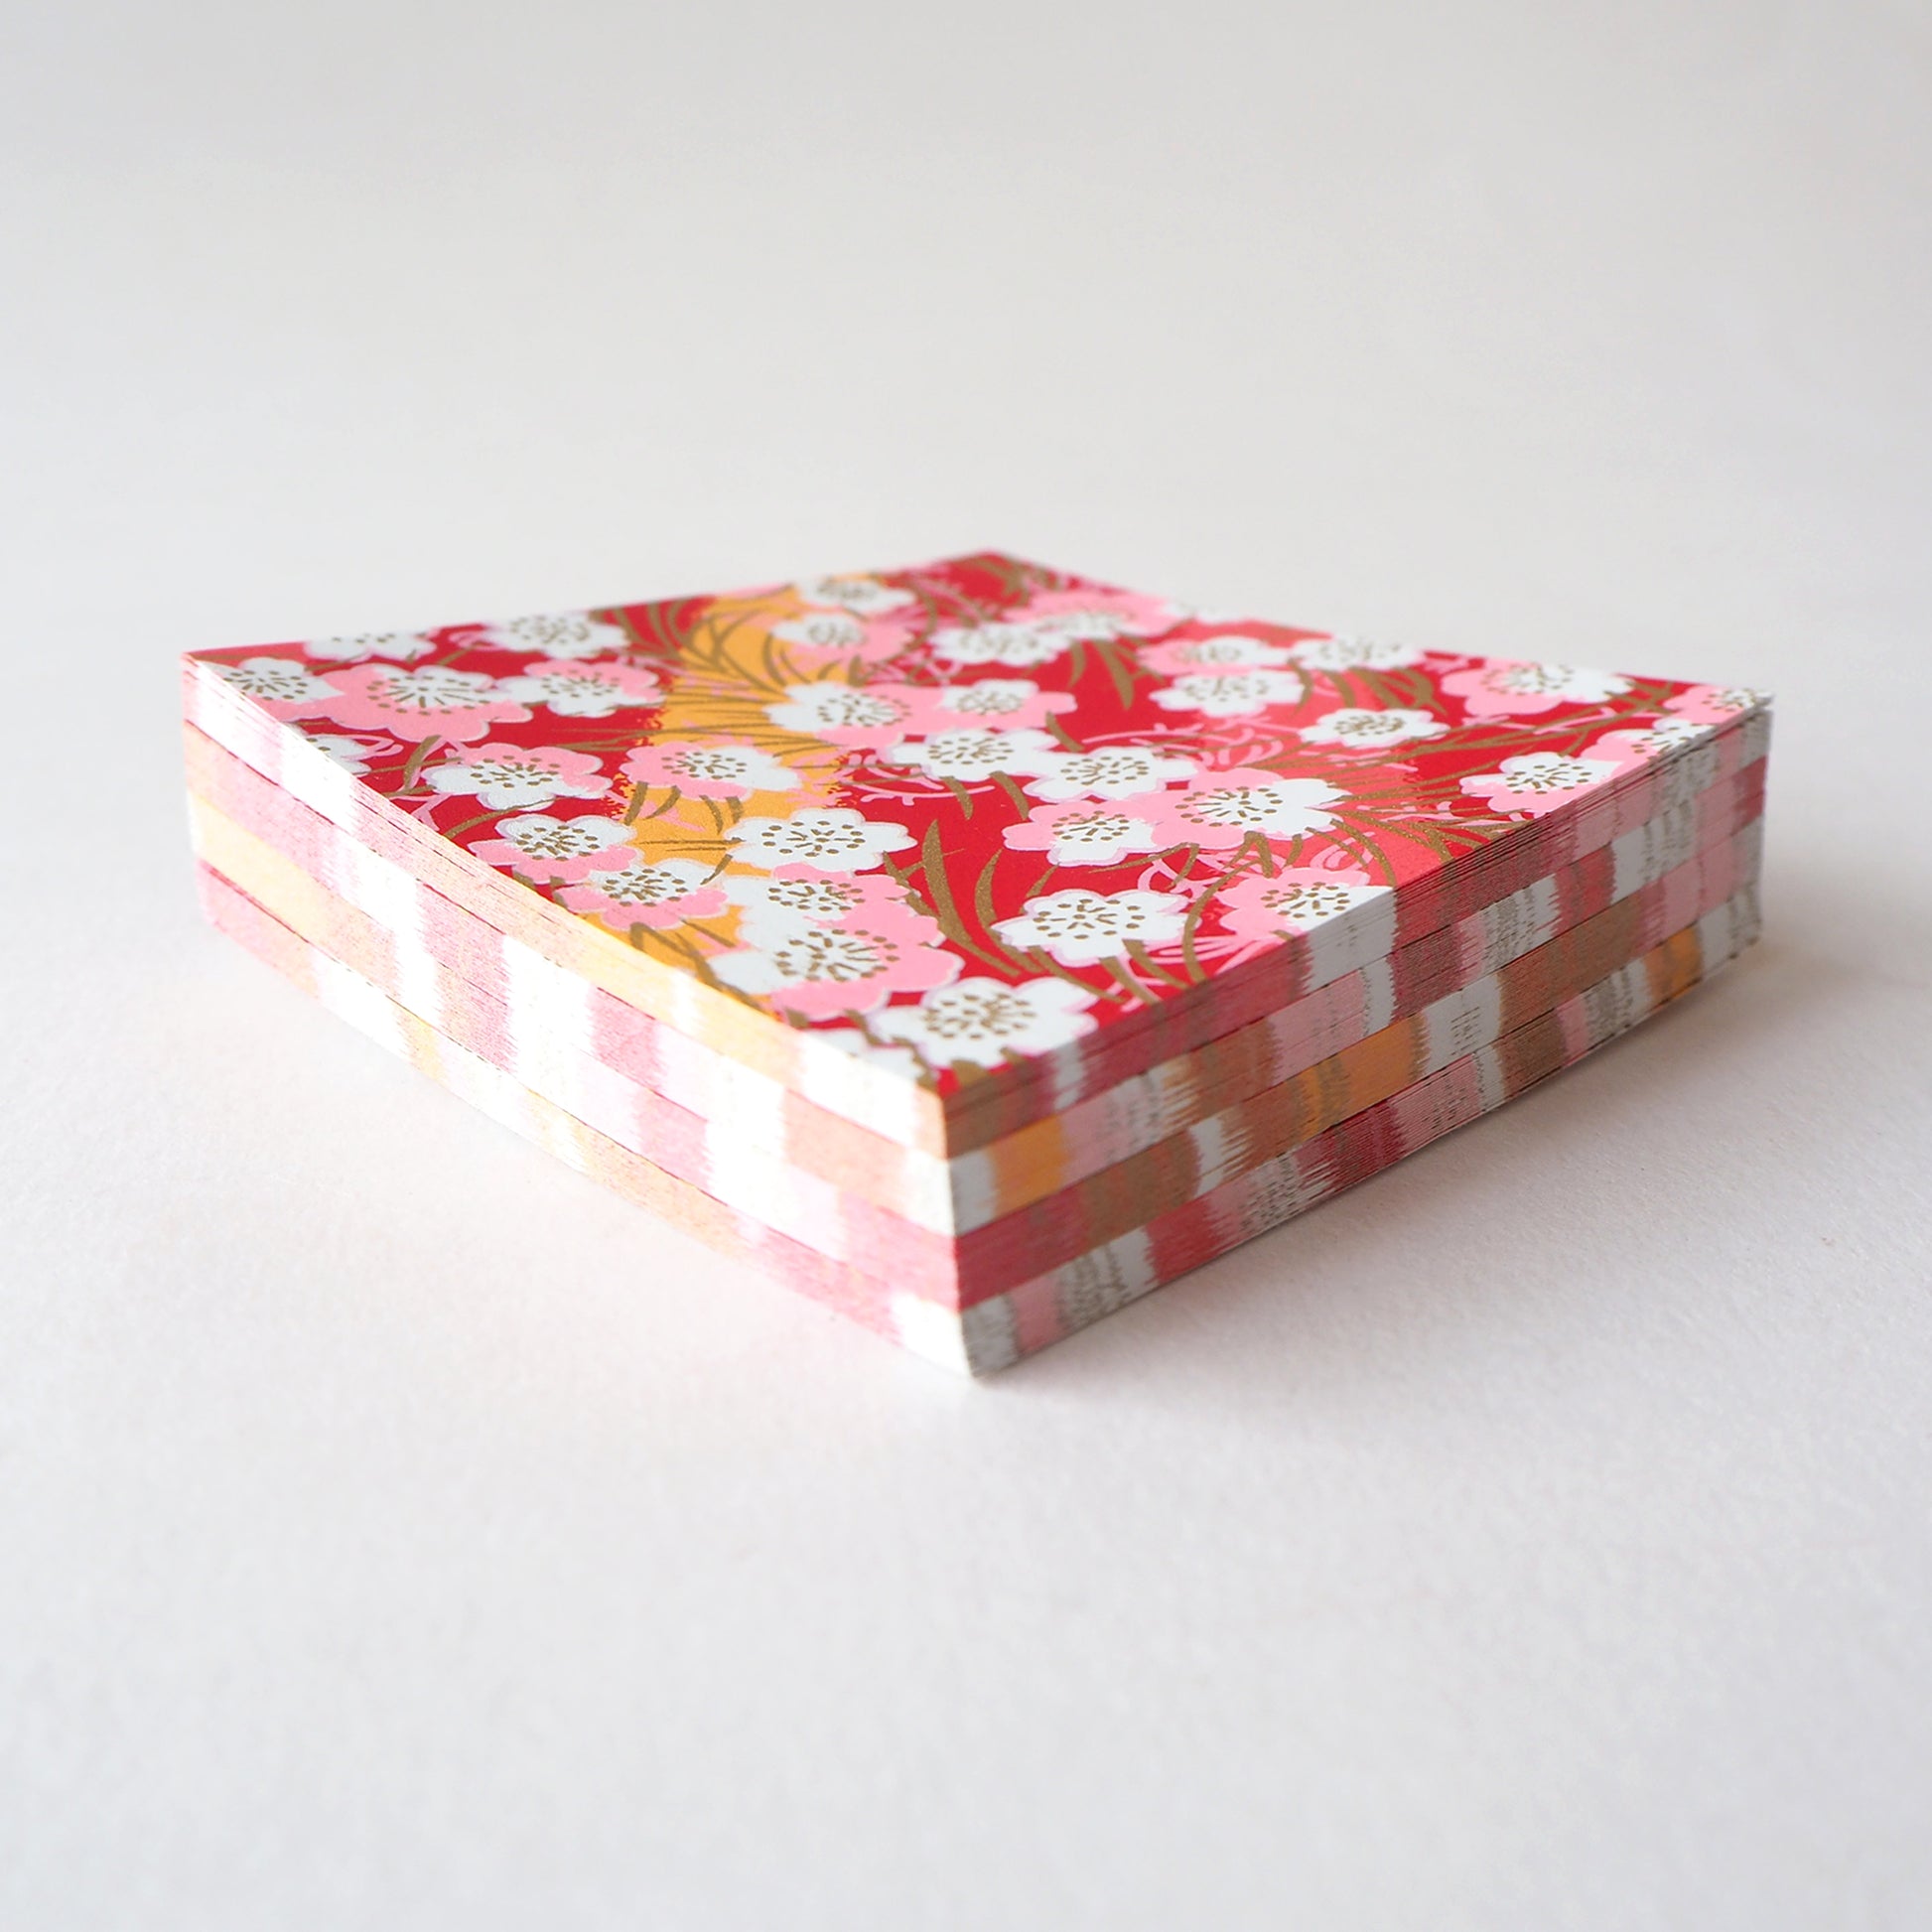 Pack of 100 Sheets 7x7cm Yuzen Washi Origami Paper HZ-186 - Cherry Blossom Red & Orange Stripes - washi paper - Lavender Home London